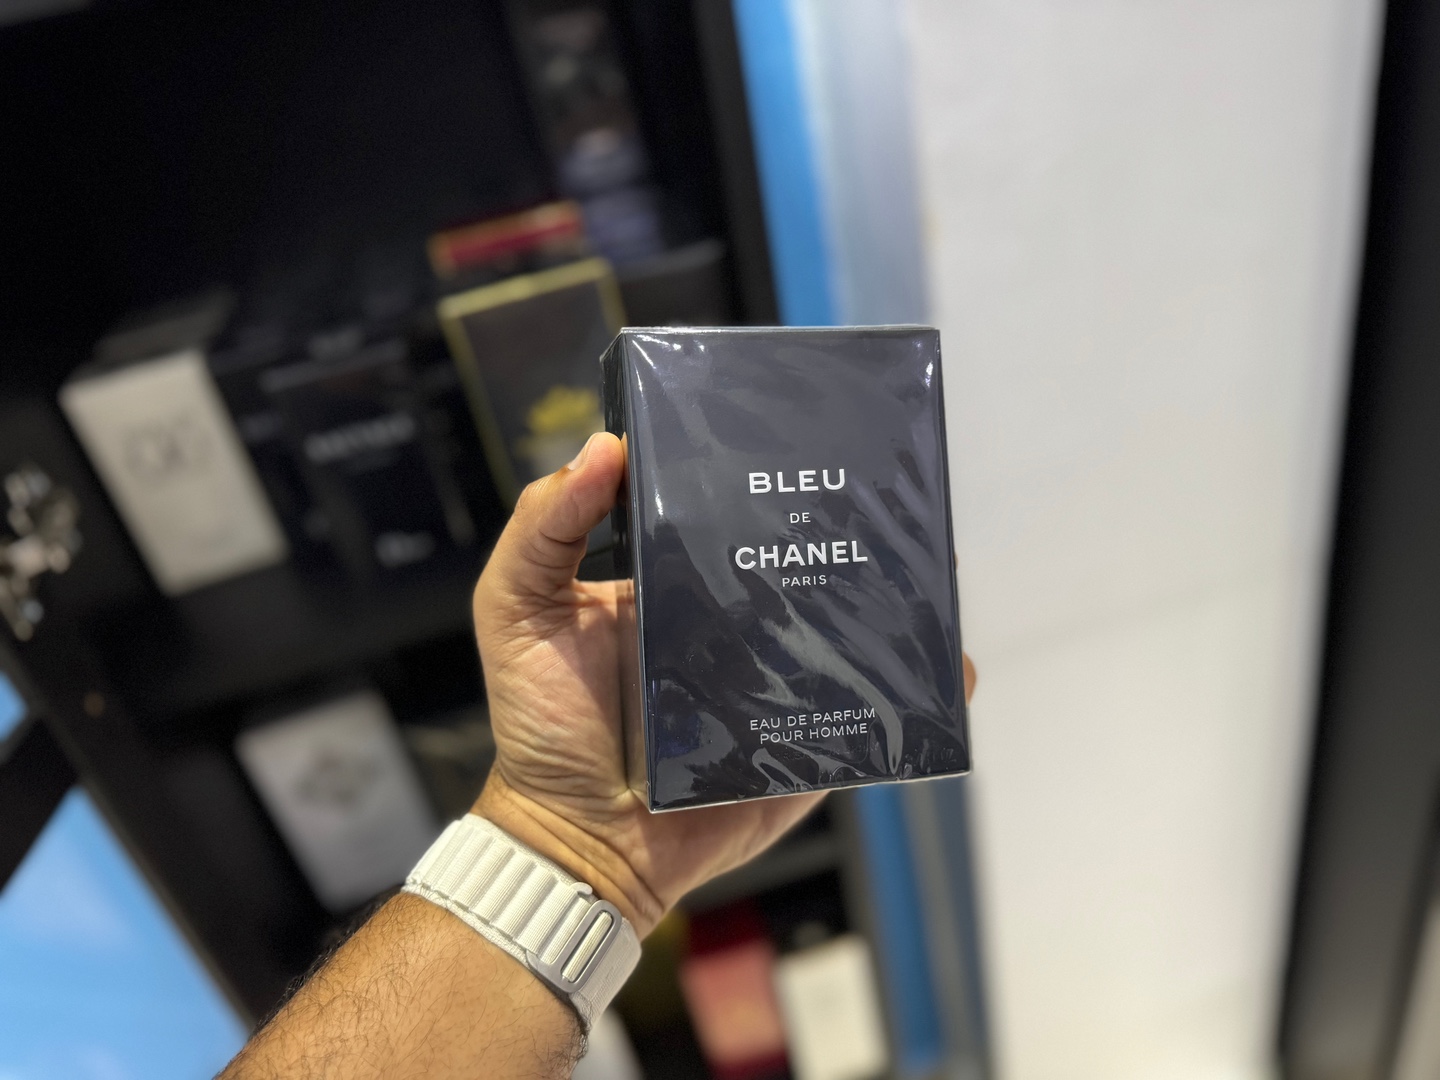 joyas, relojes y accesorios - Perfume Bleu de Chanel Paris EDP 100ML Nuevo, Original RD$ 8,995 NEG